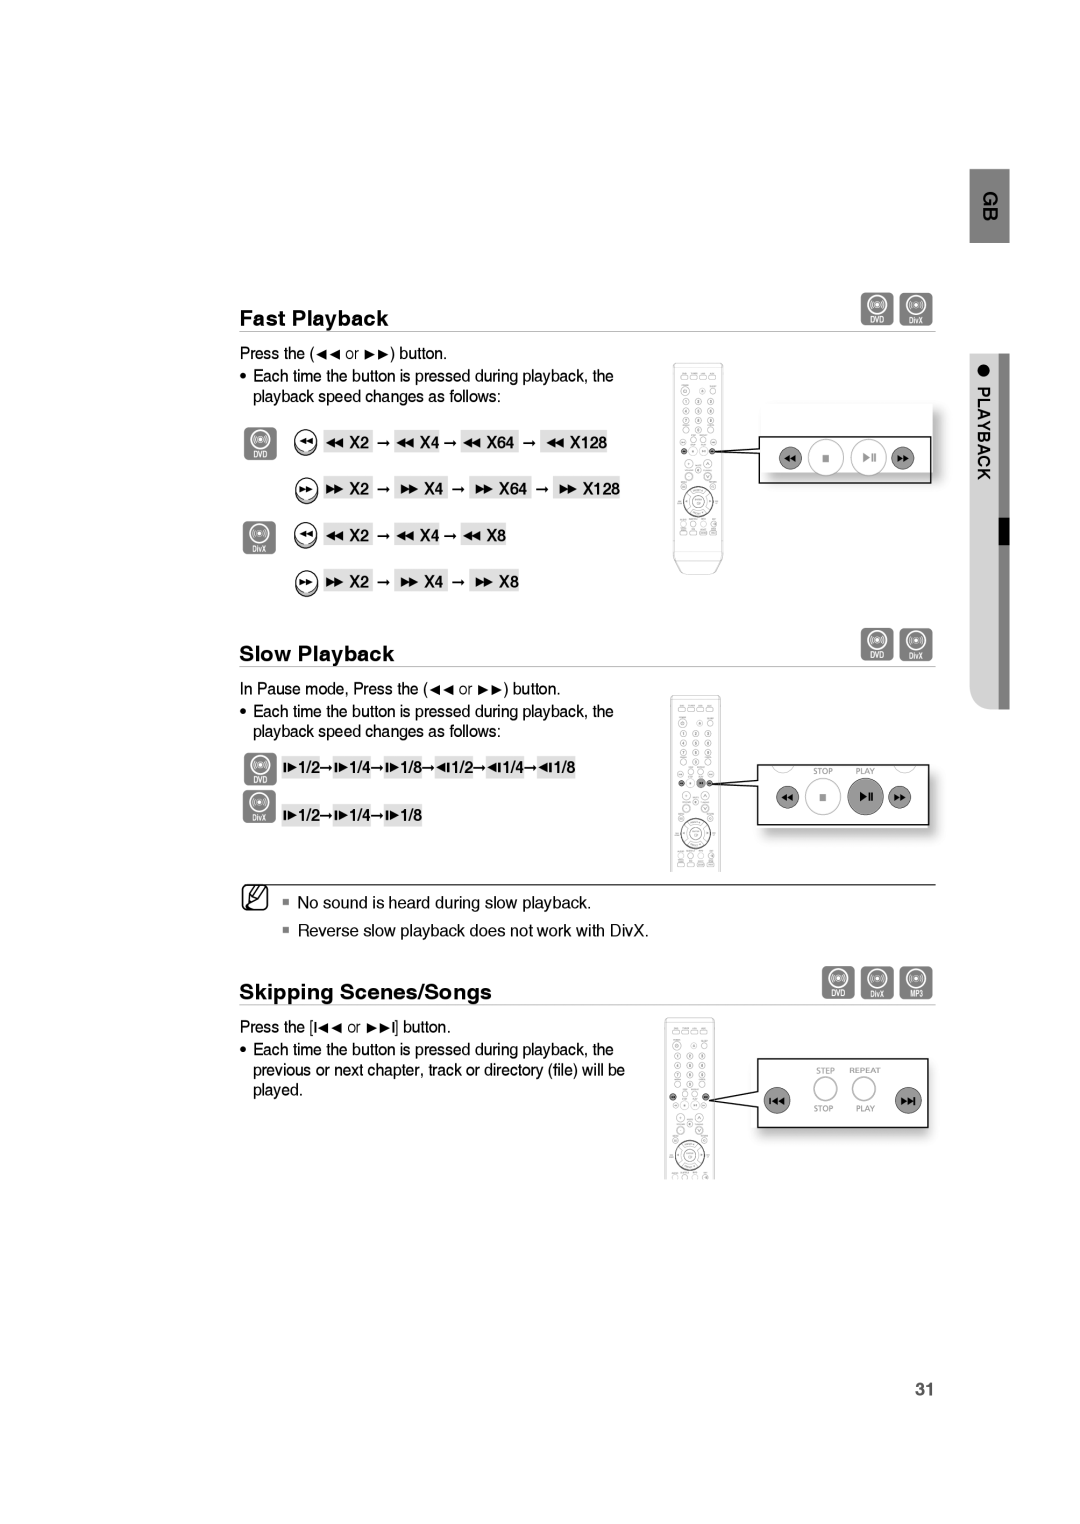 Samsung HE10T user manual D Da, Slow Playback, Skipping Scenes/Songs, Fast Playback,  X2  X4  X64   X2  X4  X64  